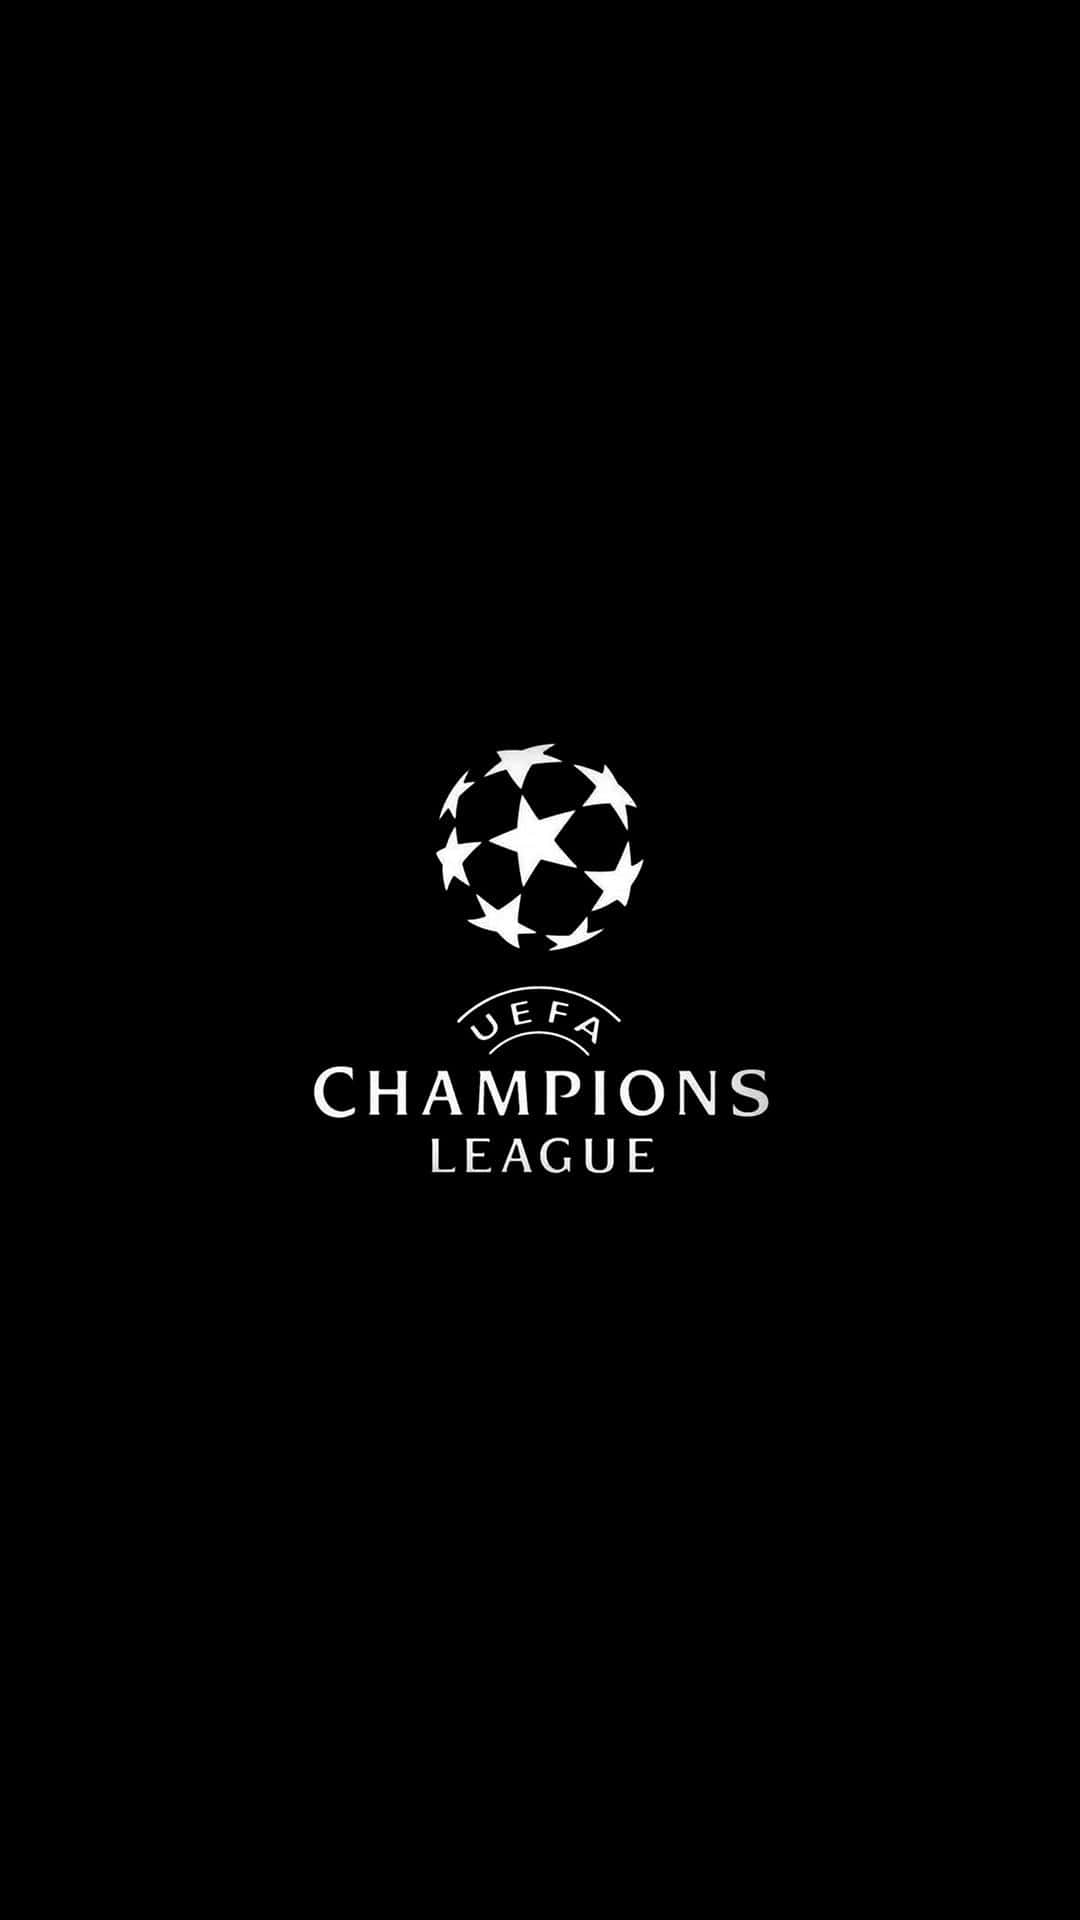 Fondosde Pantalla De Fútbol Para Iphone De La Uefa Champions League. Fondo de pantalla